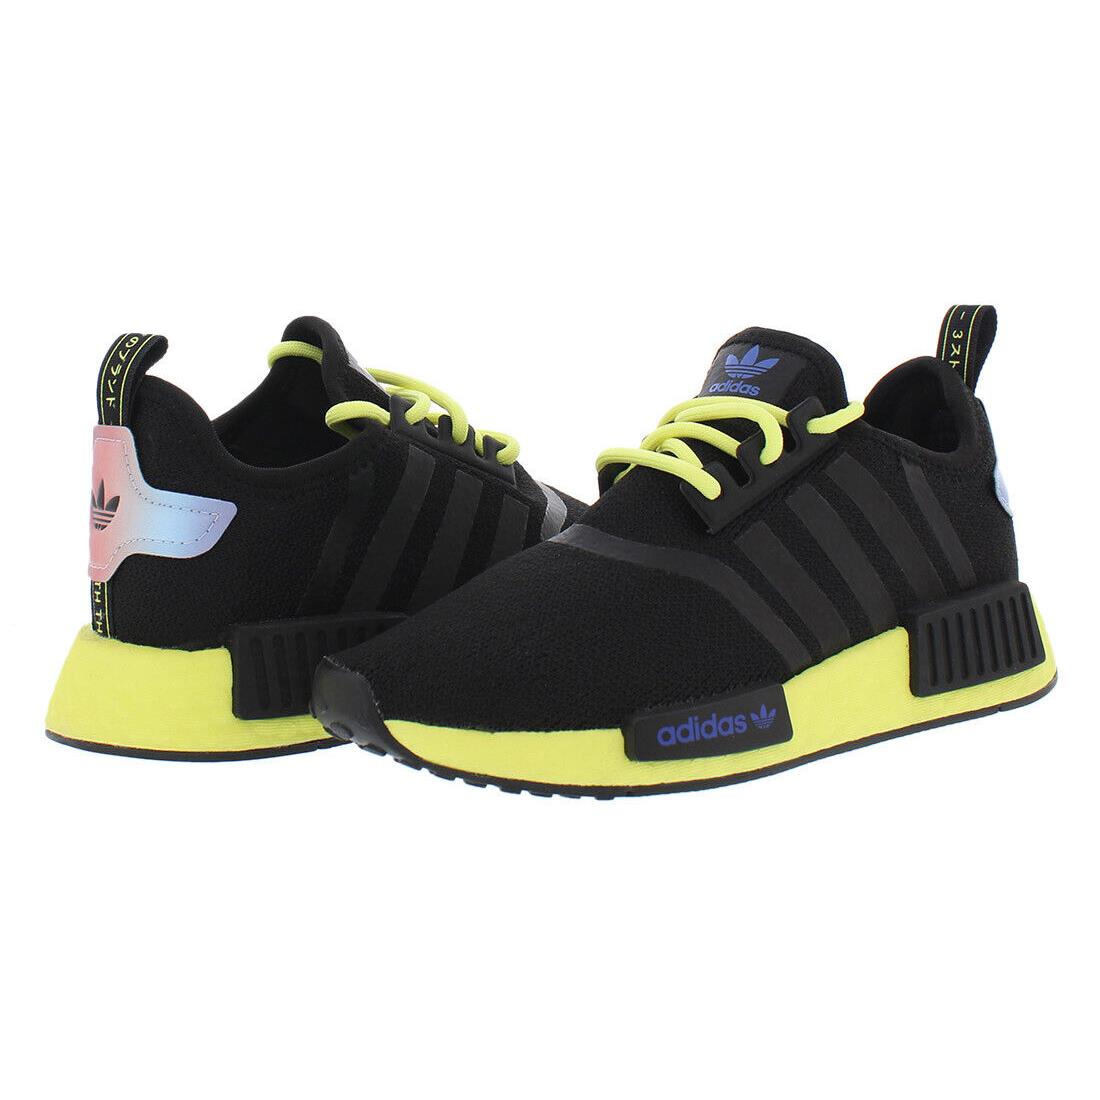 Adidas Nmd_R1 Boys Shoes Size 11 Color: Black/yellow - Black/Yellow, Main: Black